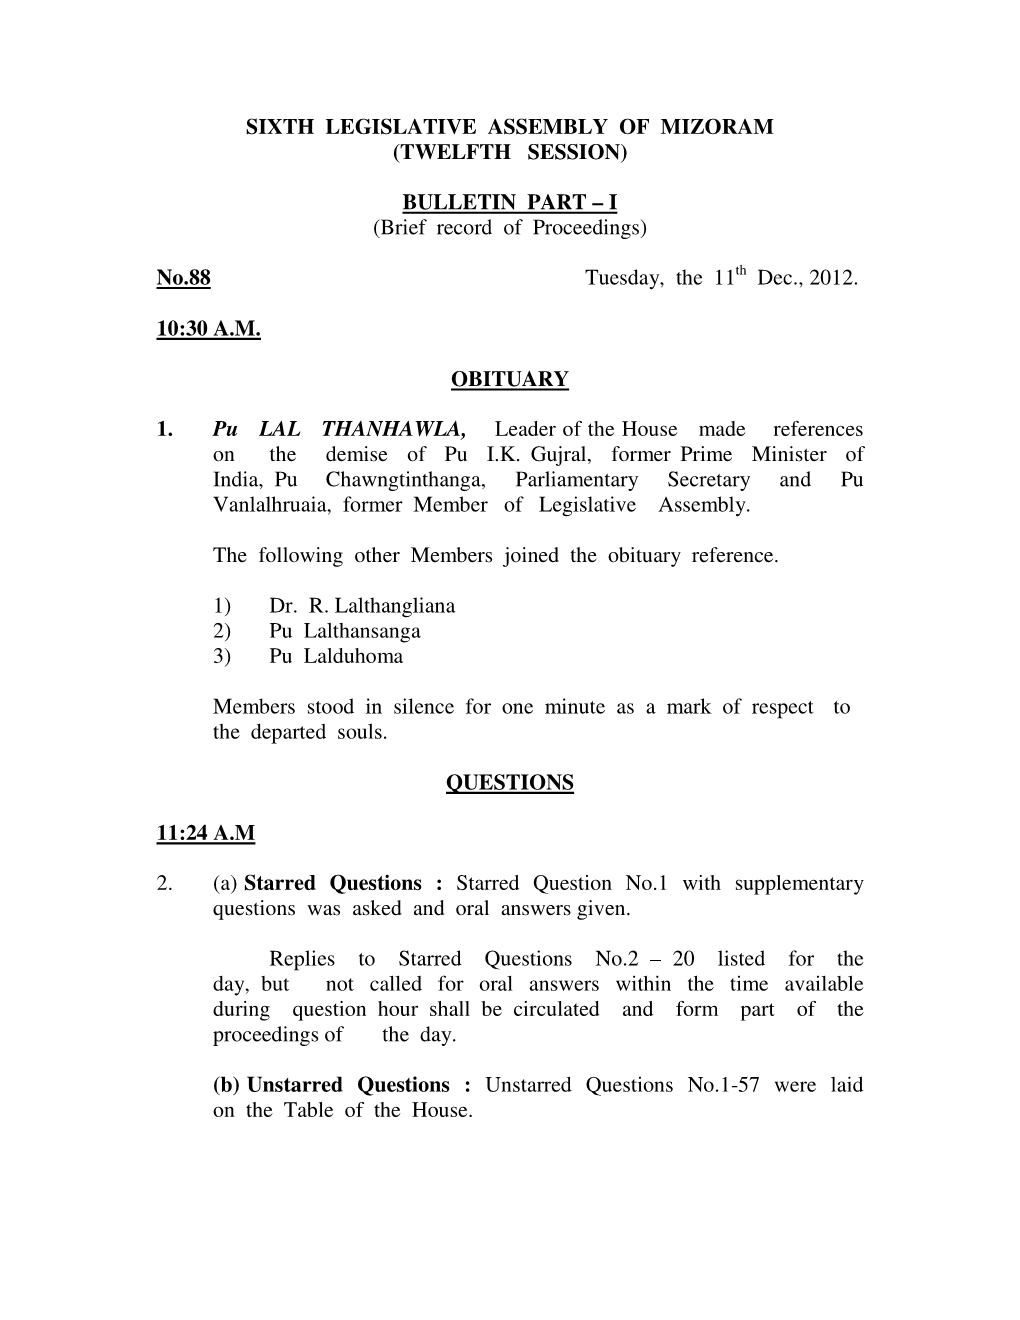 Sixth Legislative Assembly of Mizoram (Twelfth Session)